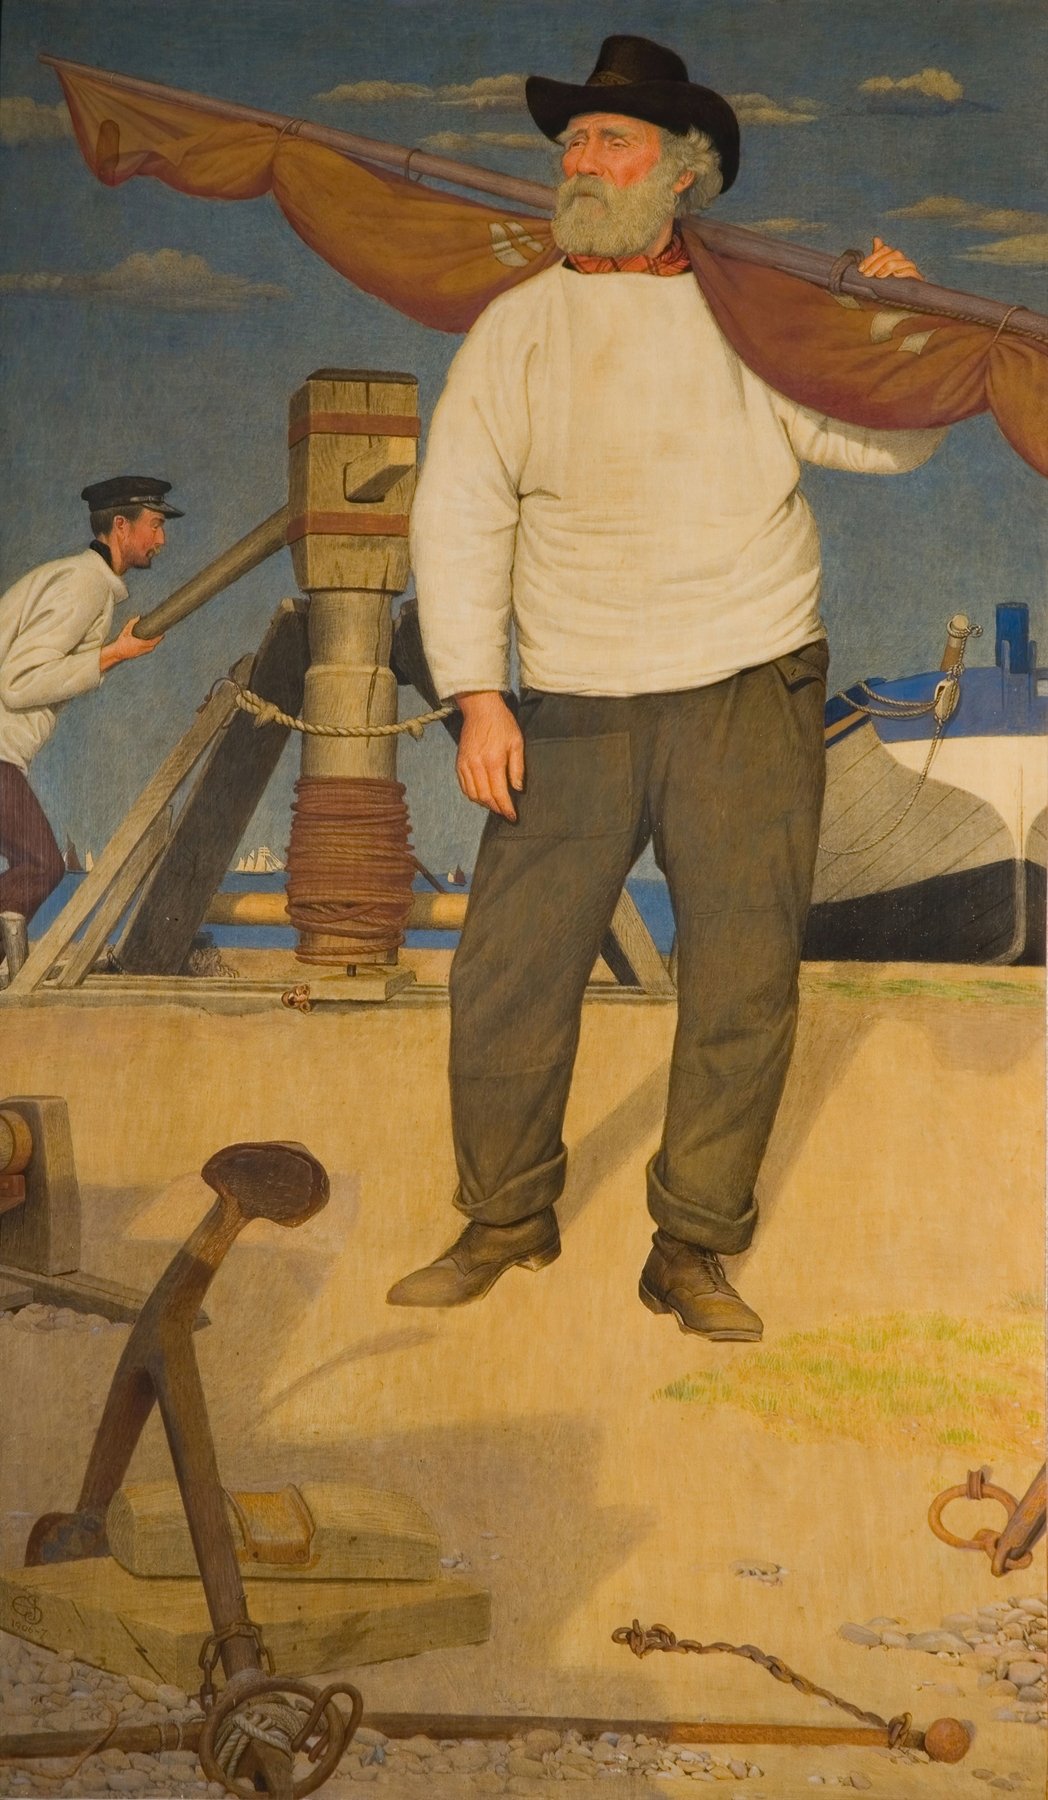 Fisherman Carrying a Sail (1907)